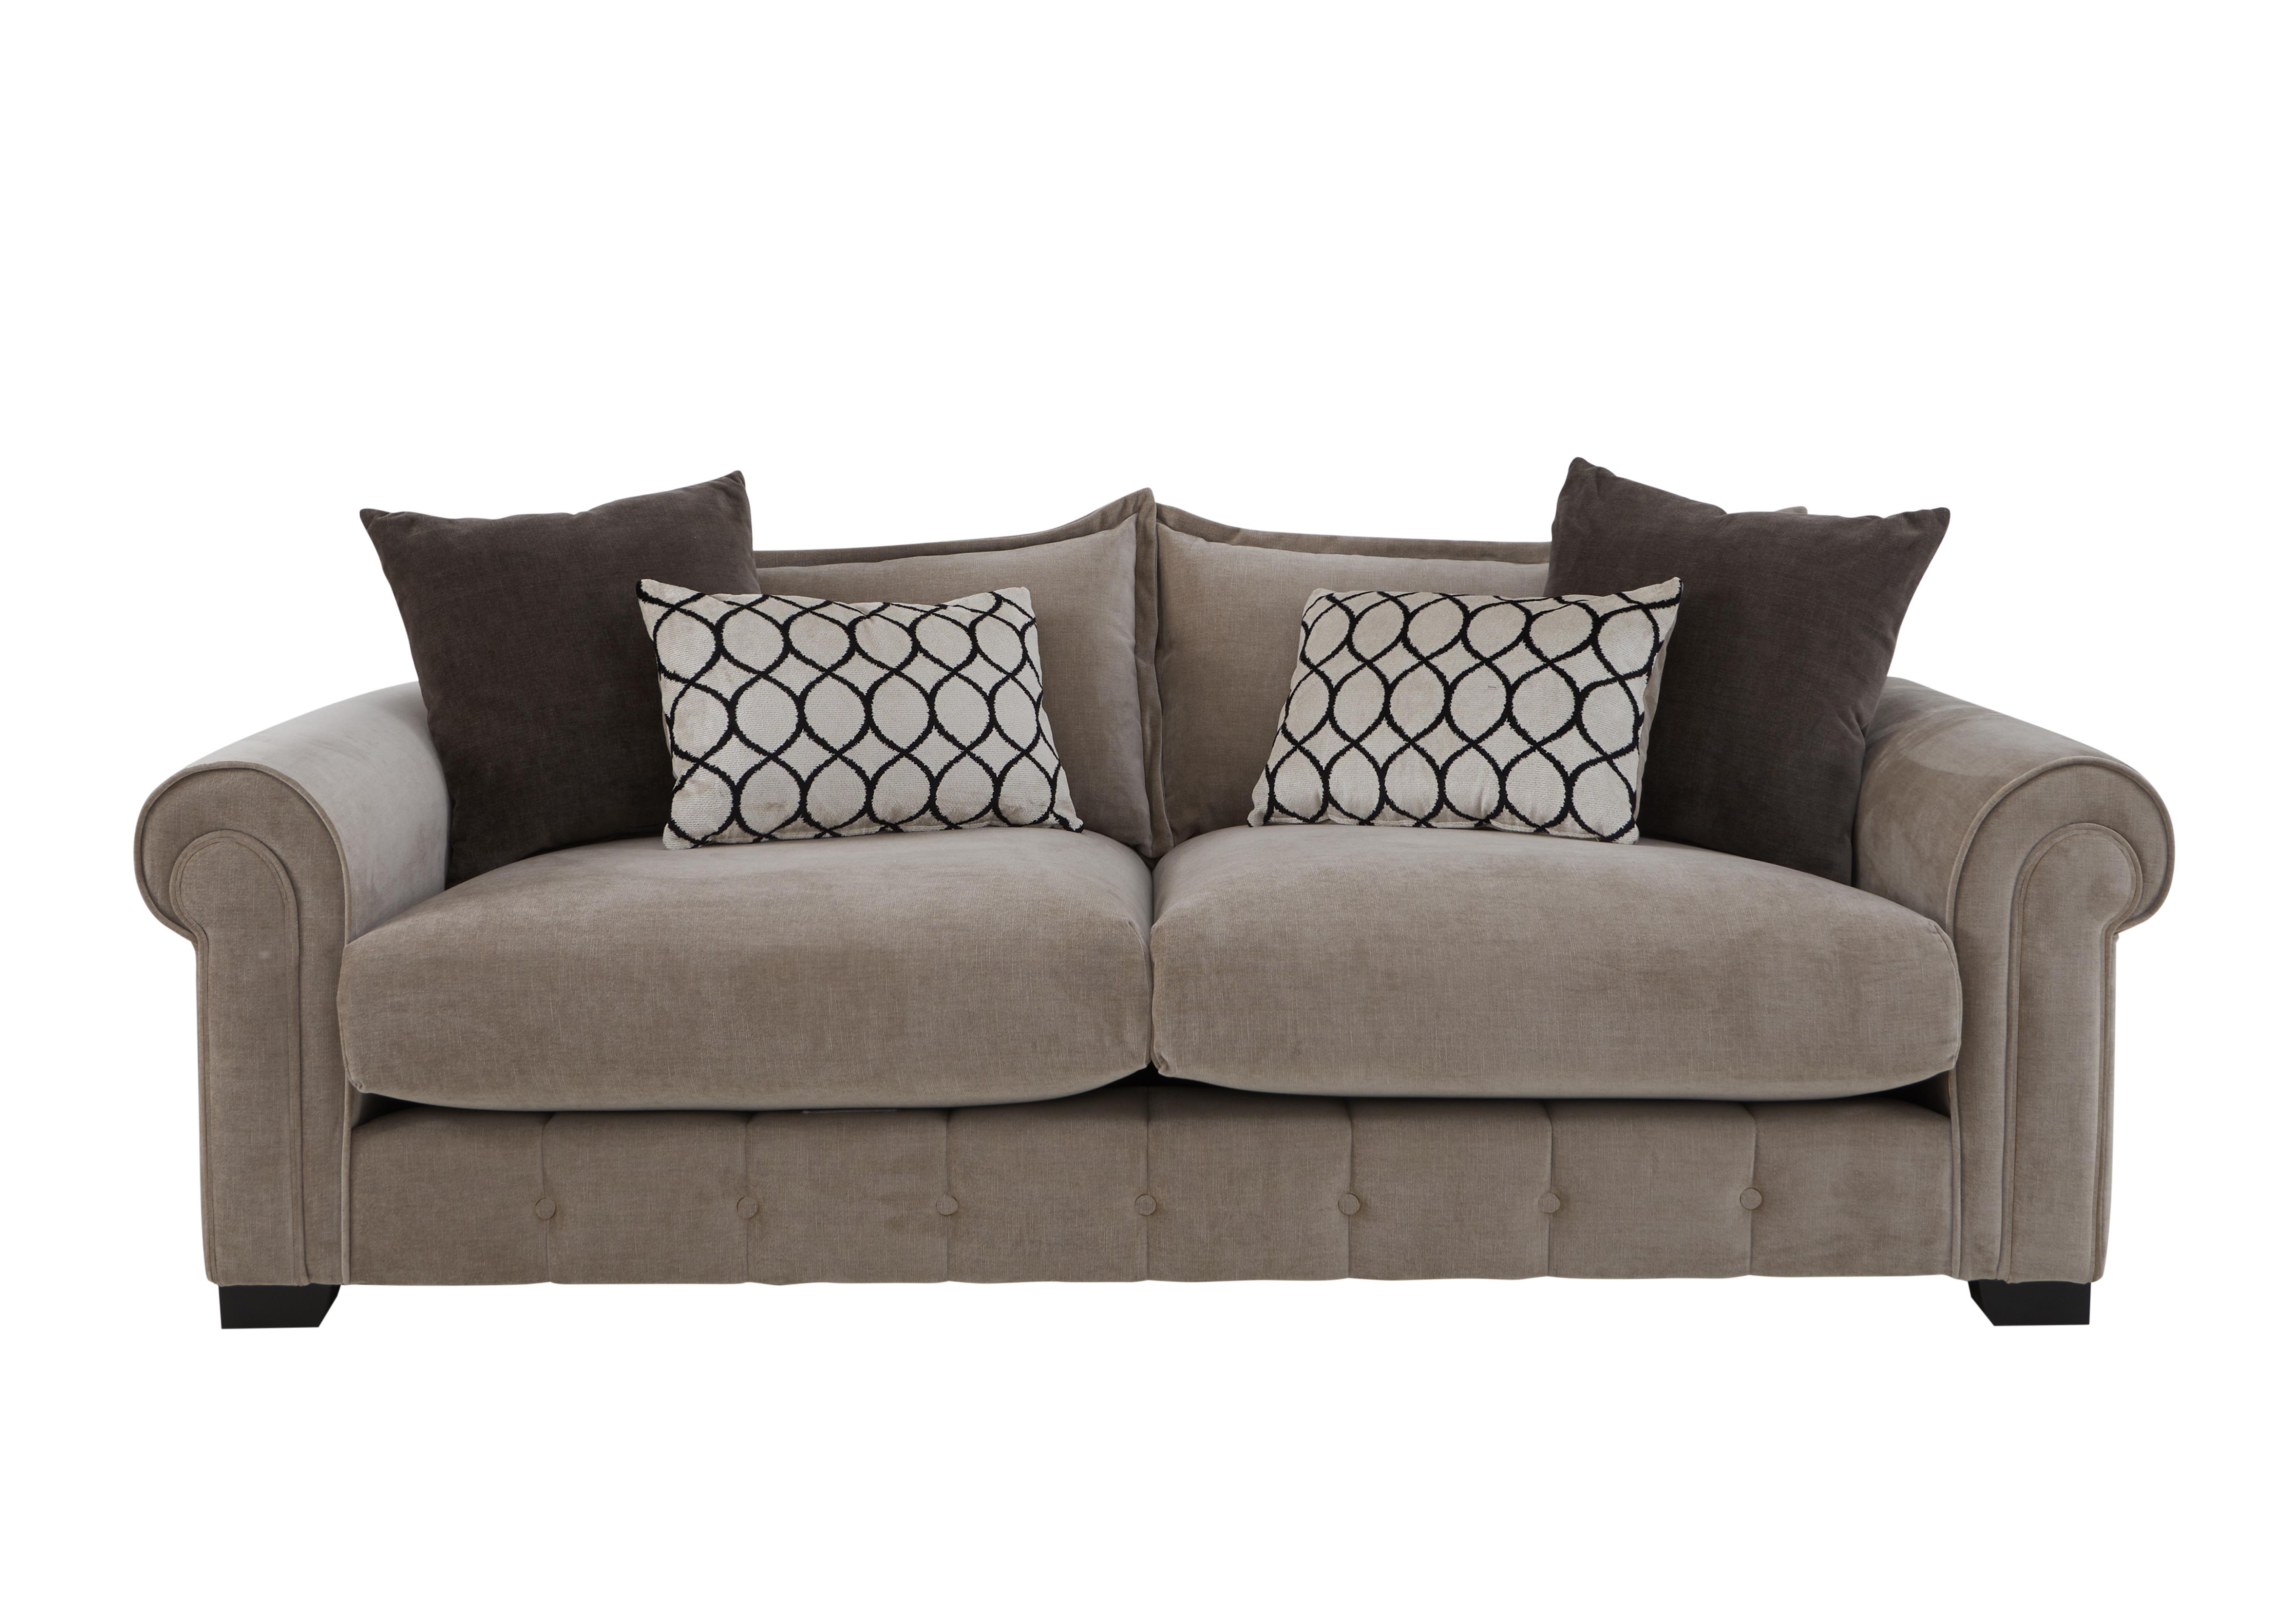 Sumptuous 4 Seater Fabric Sofa in Chamonix Wicker Dk/Self on Furniture Village